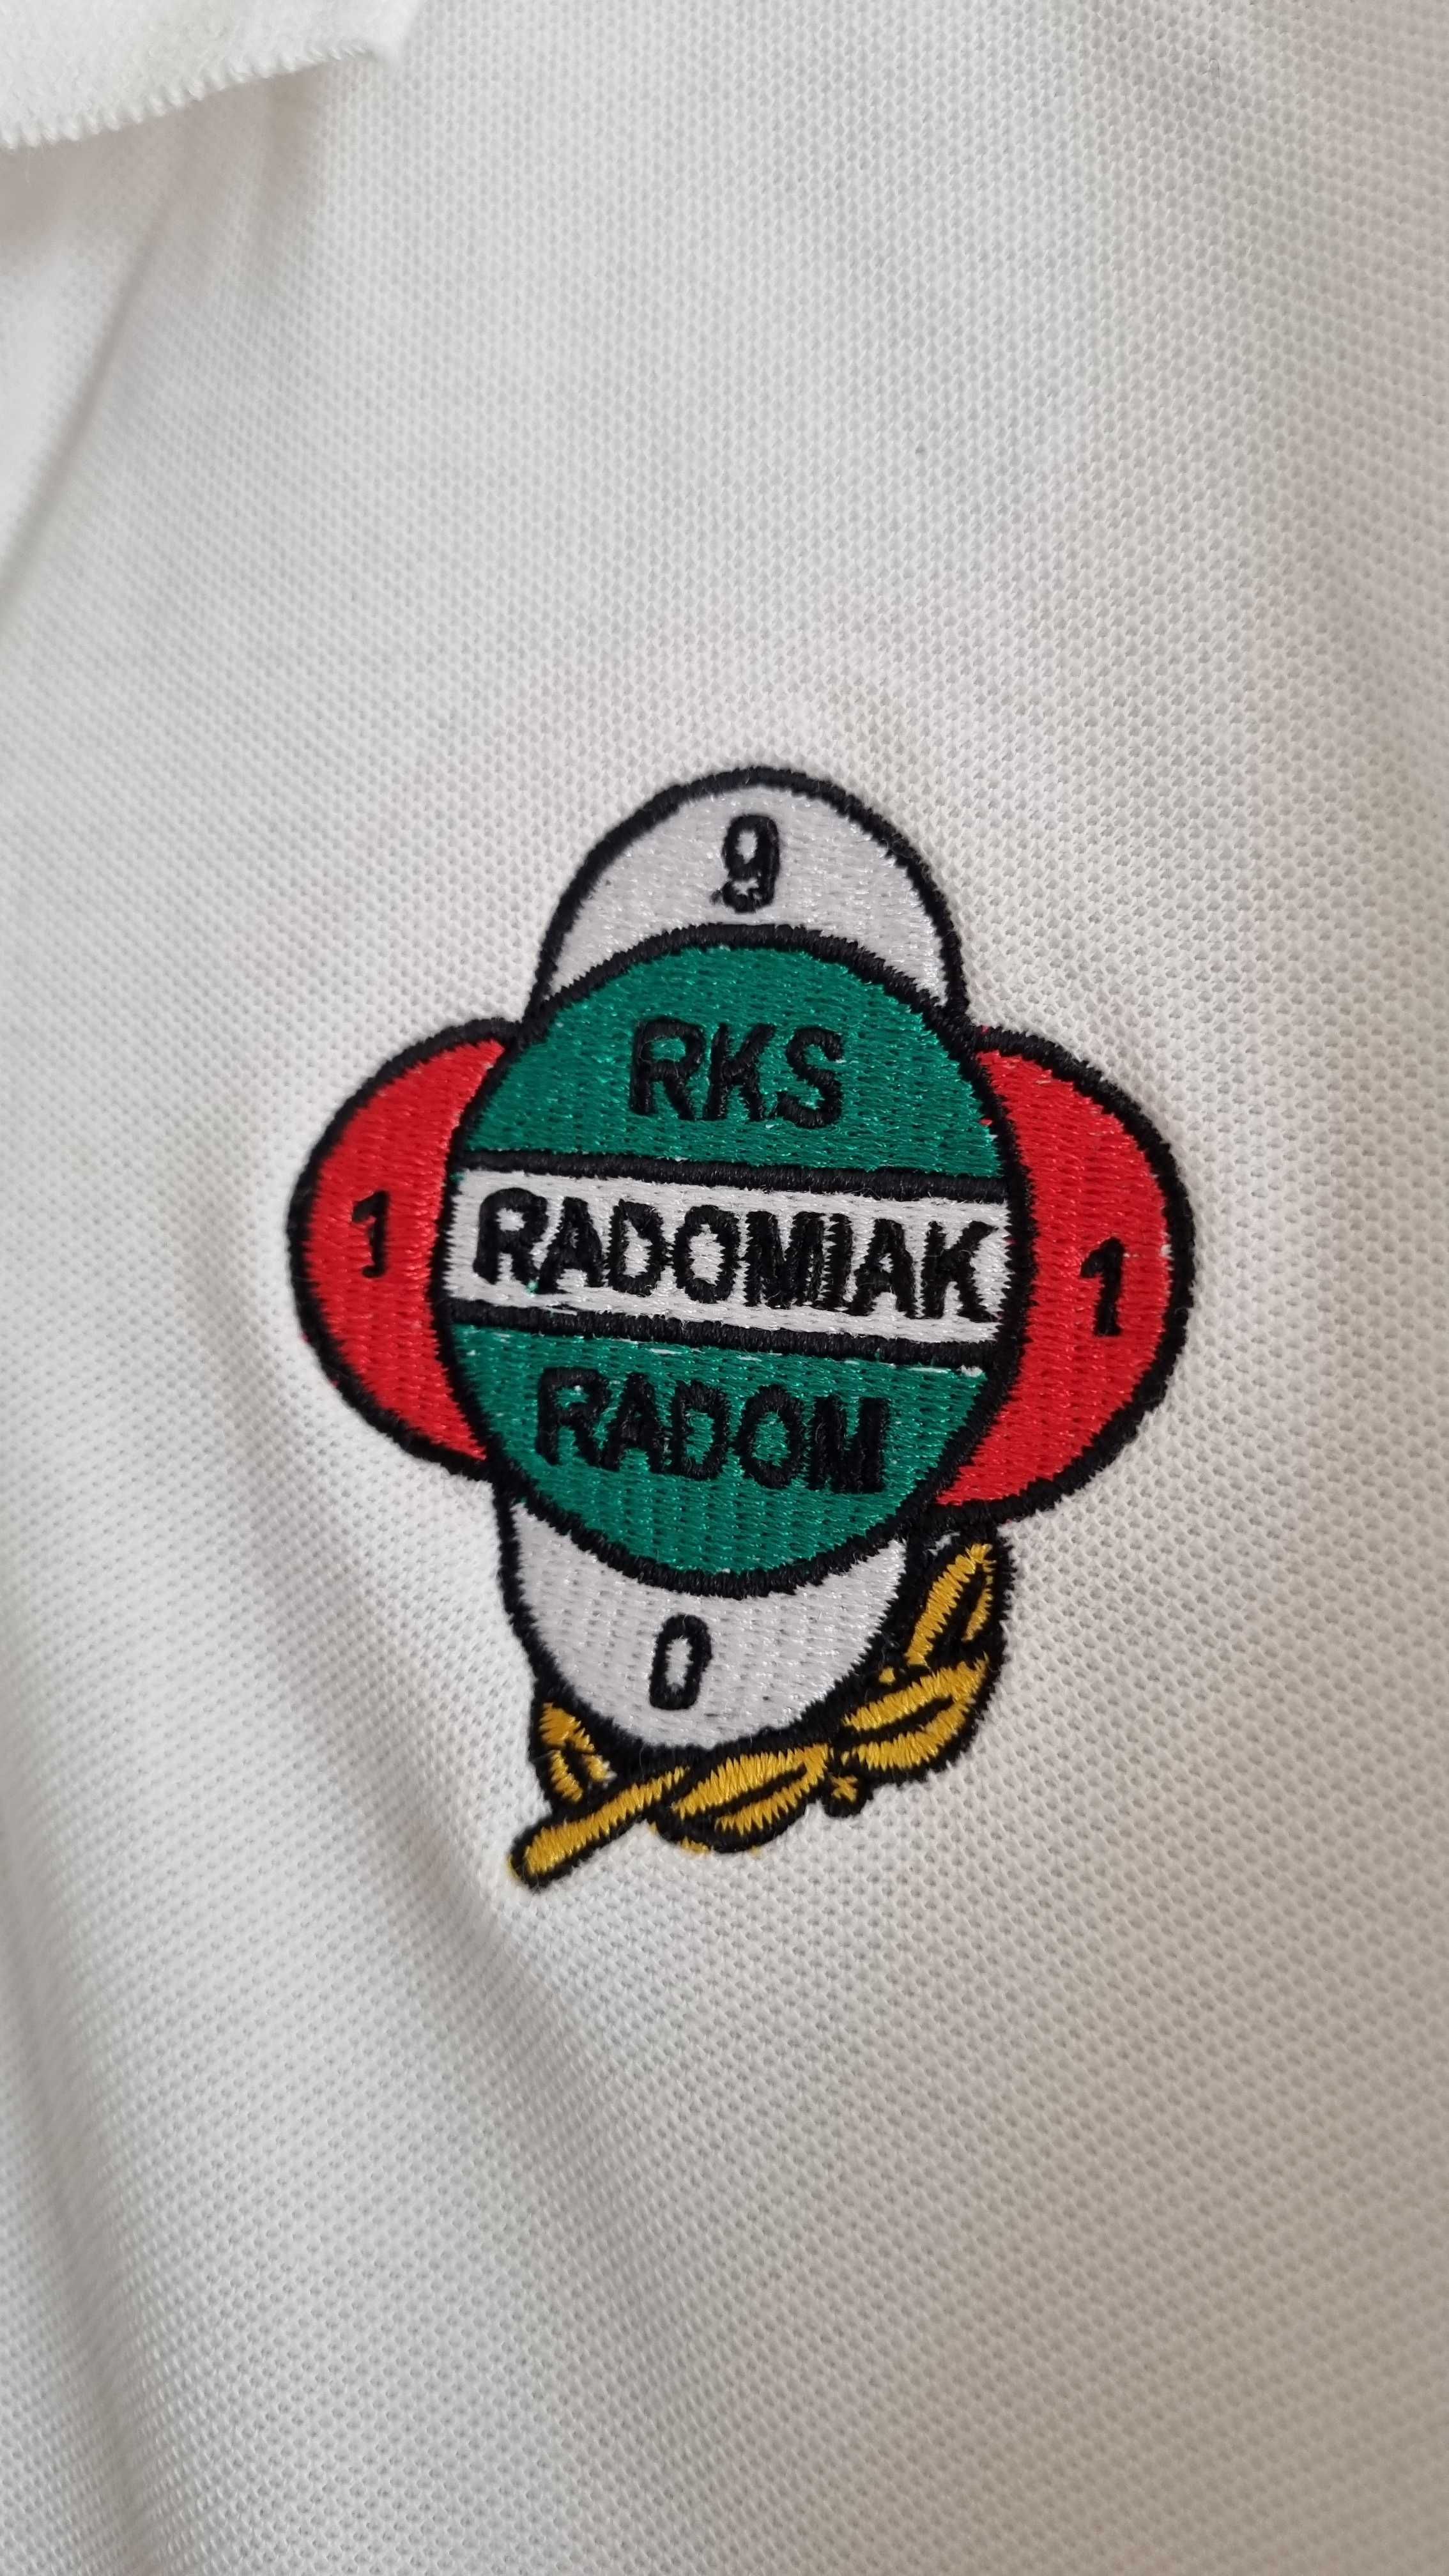 Radomiak T-shirt koszulka